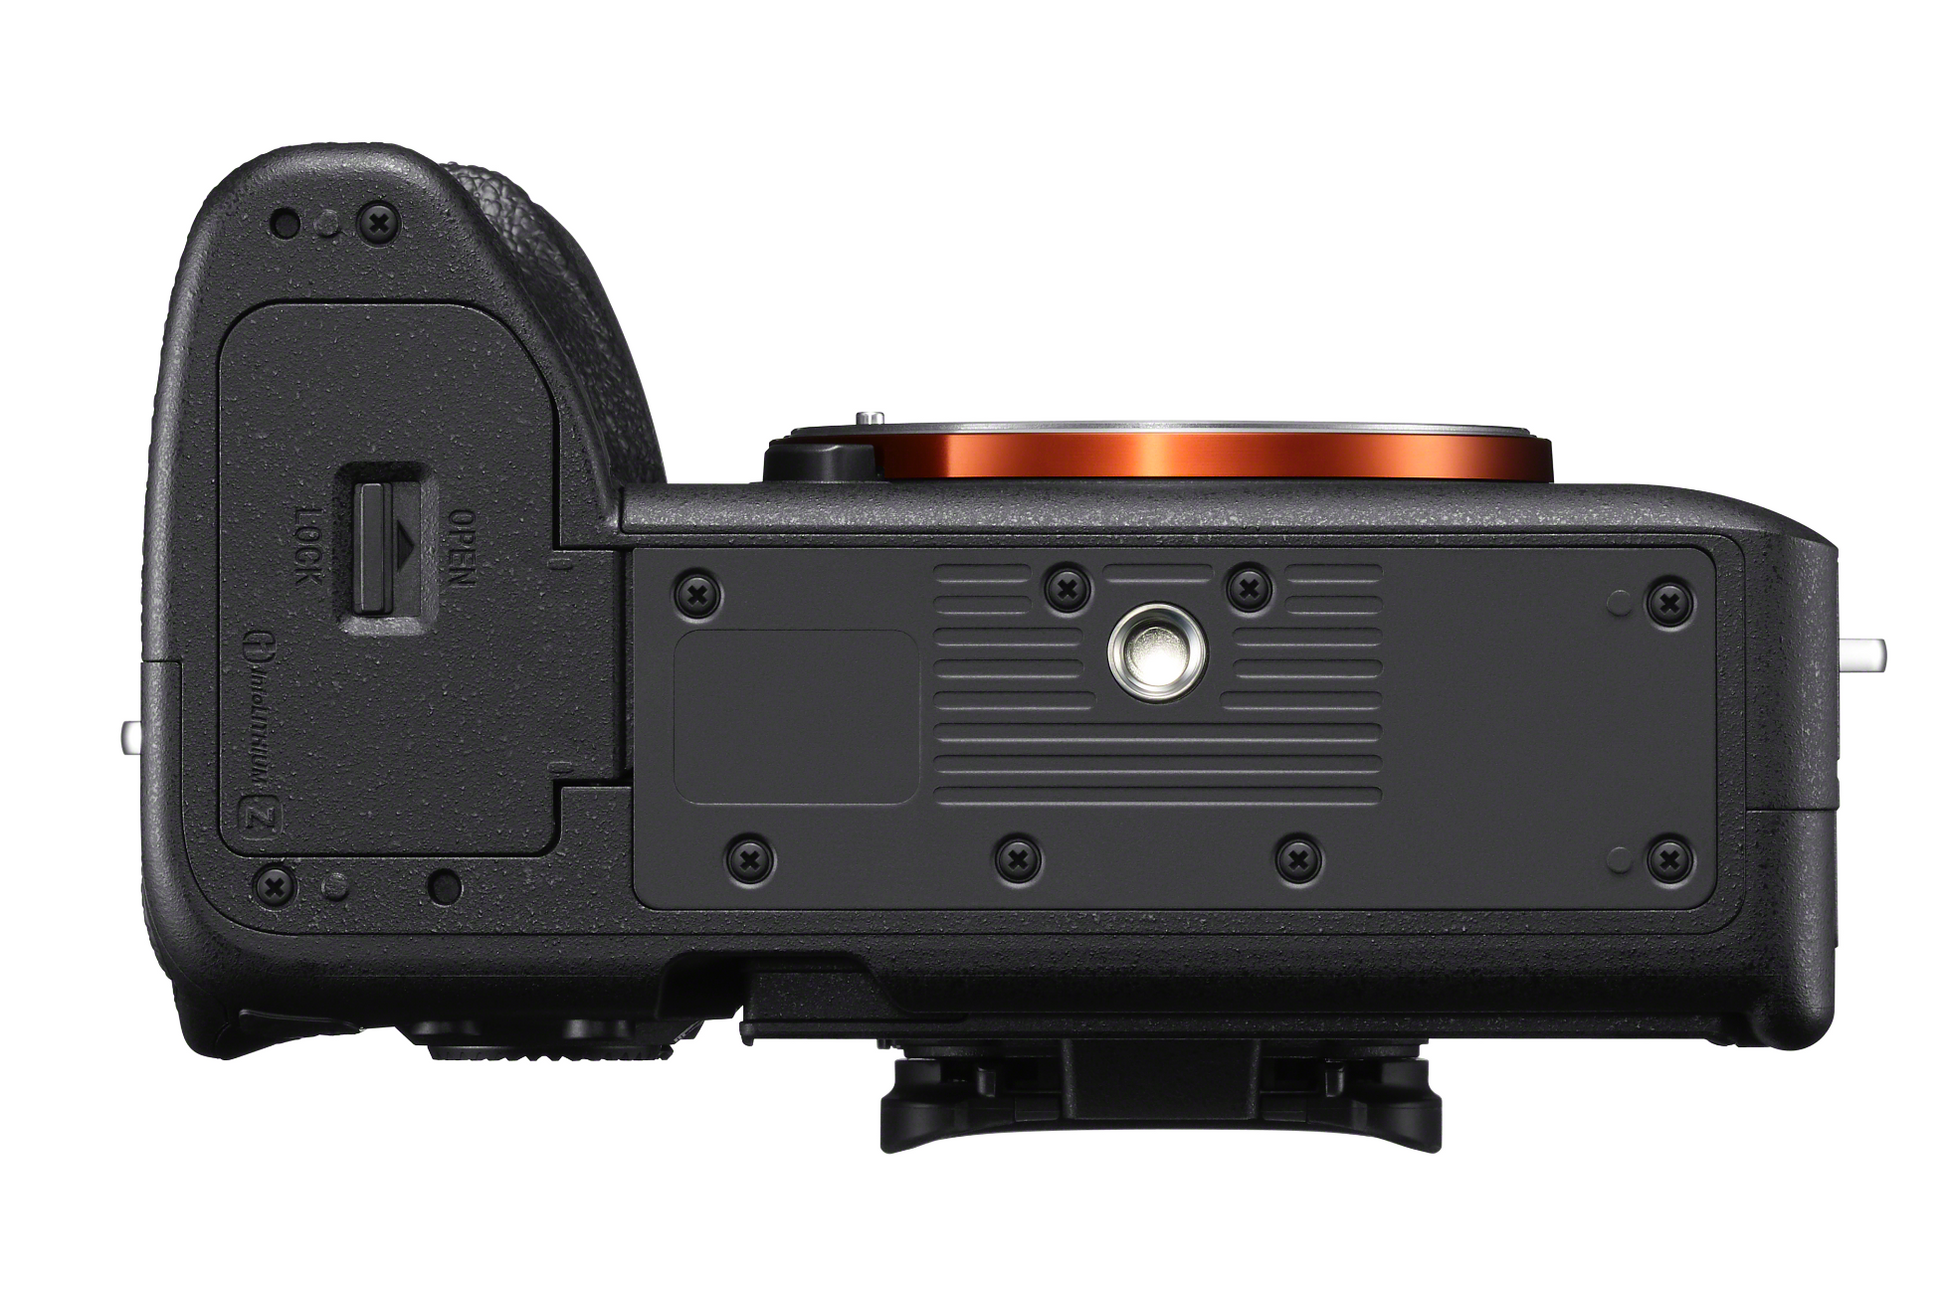 Sony A7 Mark IV, FE 28-70mm F/3.5-5.6 OSS Lens.